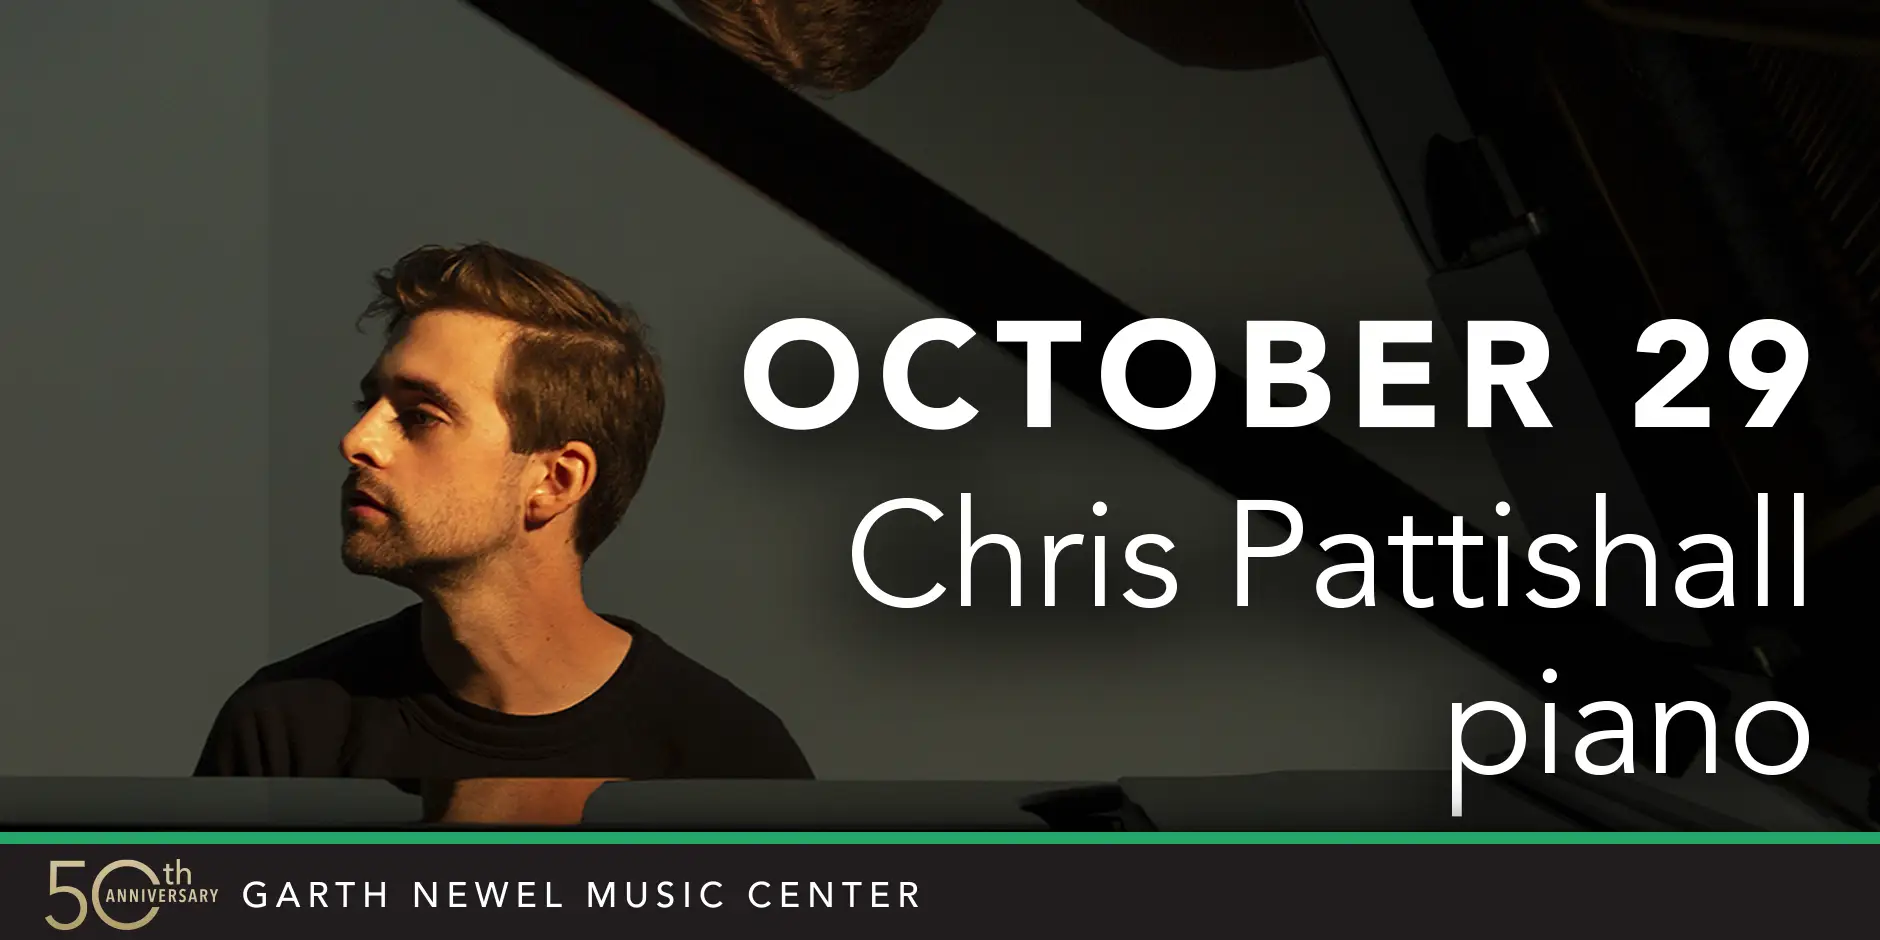 October 29 - Chris Pattishall, piano